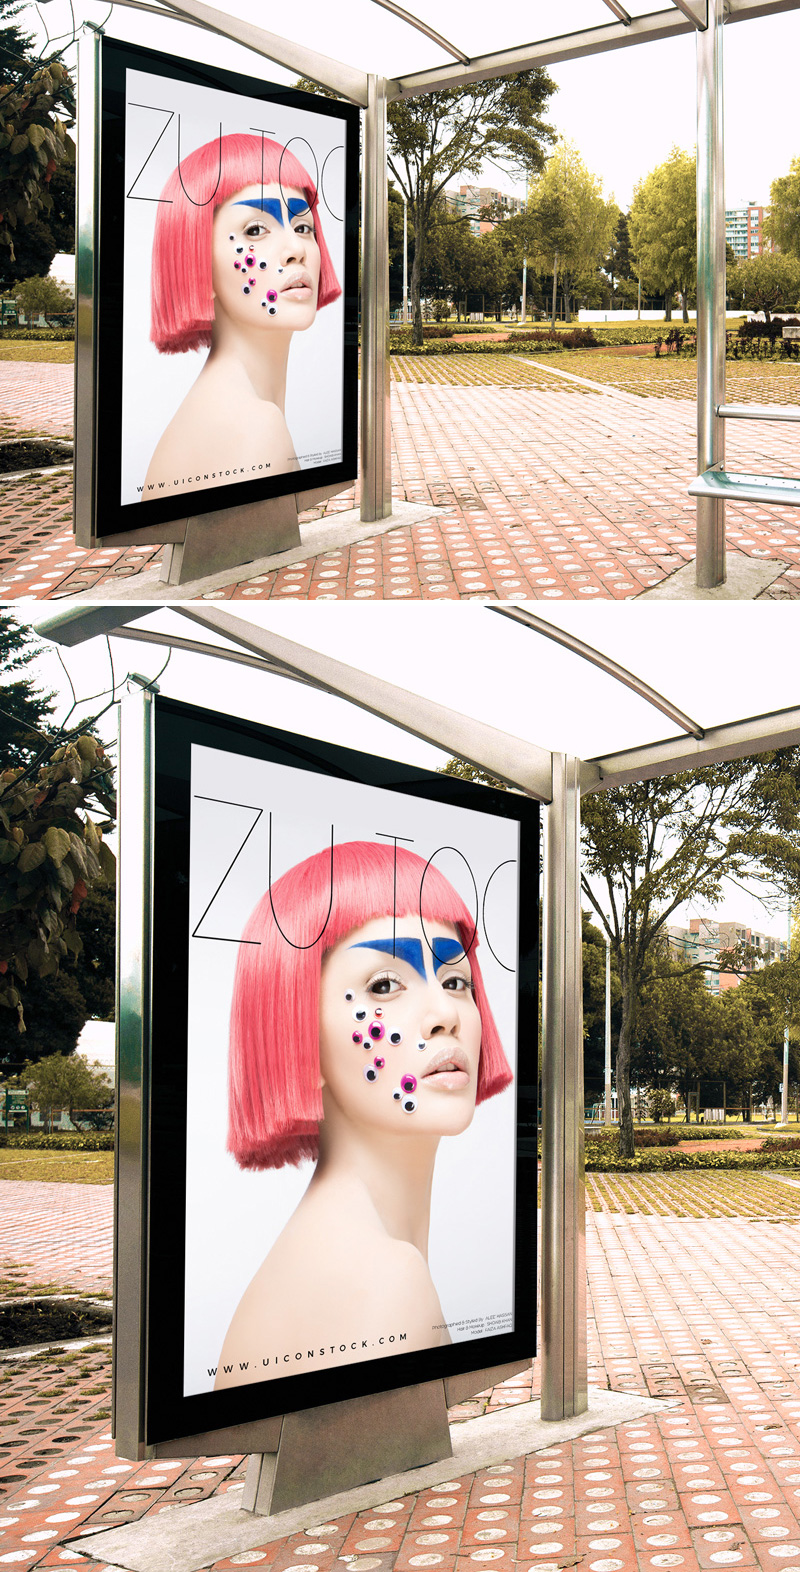 Free-Outdoor-Bus-Stop-Branding-Poster-Billboard-Mockup-PSD-2018-300